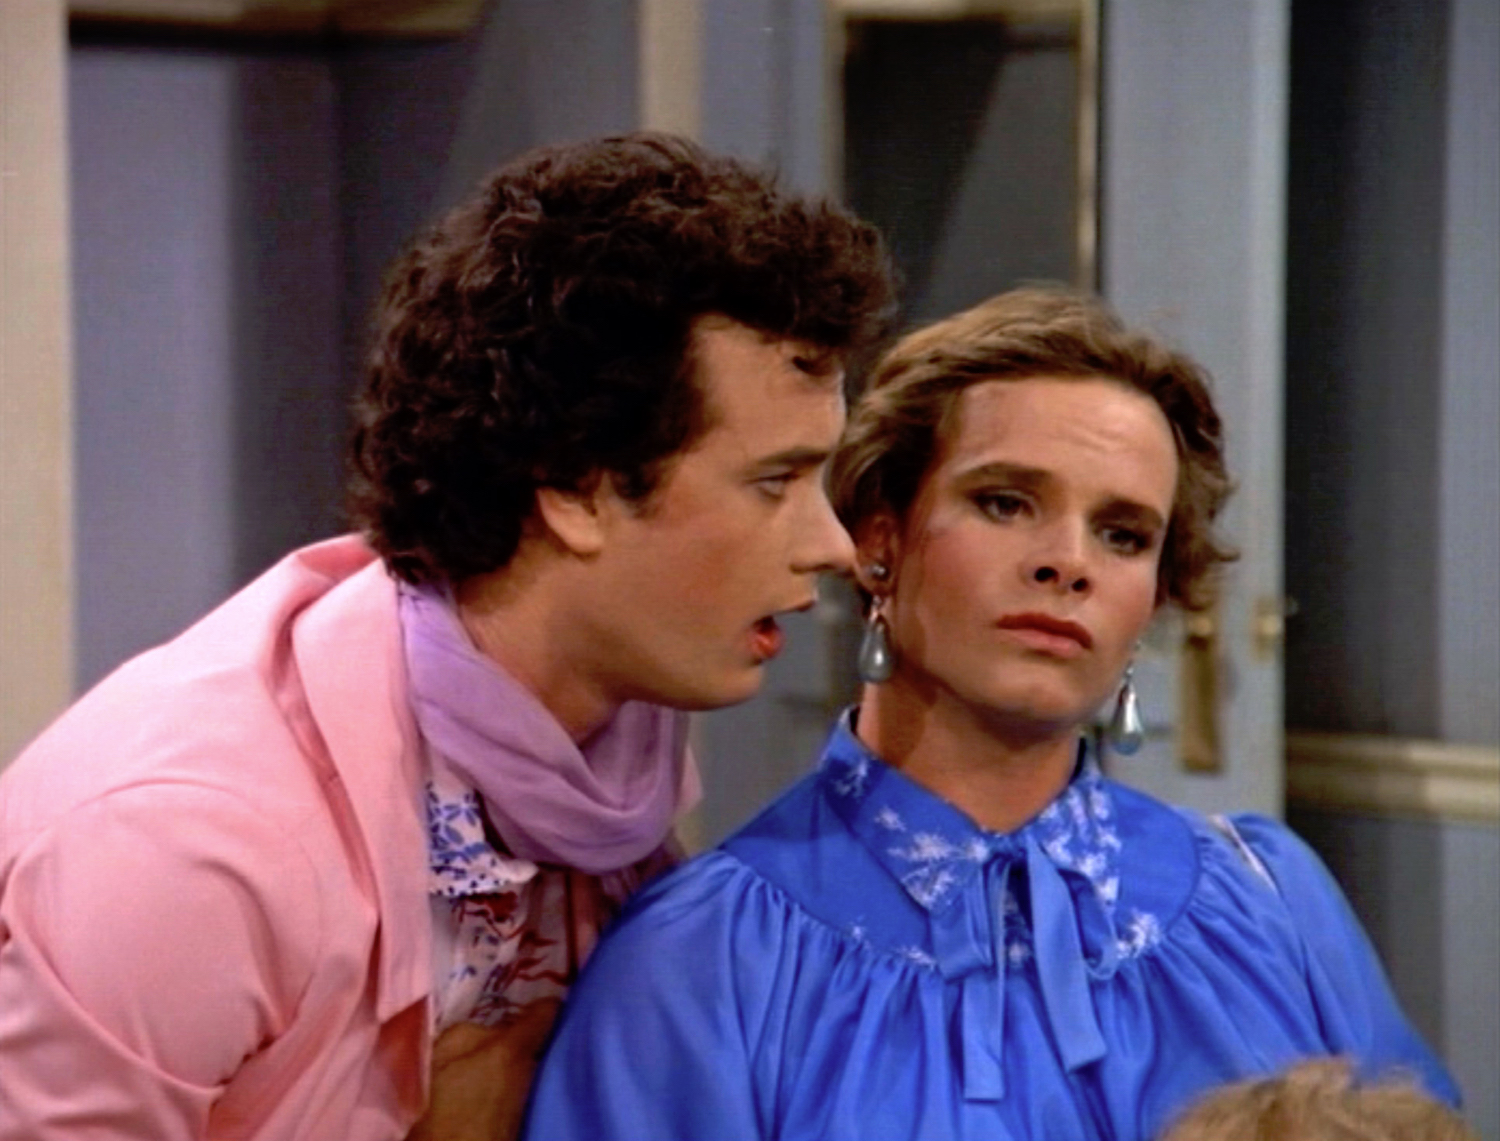 Tom Hanks and Peter Scolari dressed as women in Bosom Buddies